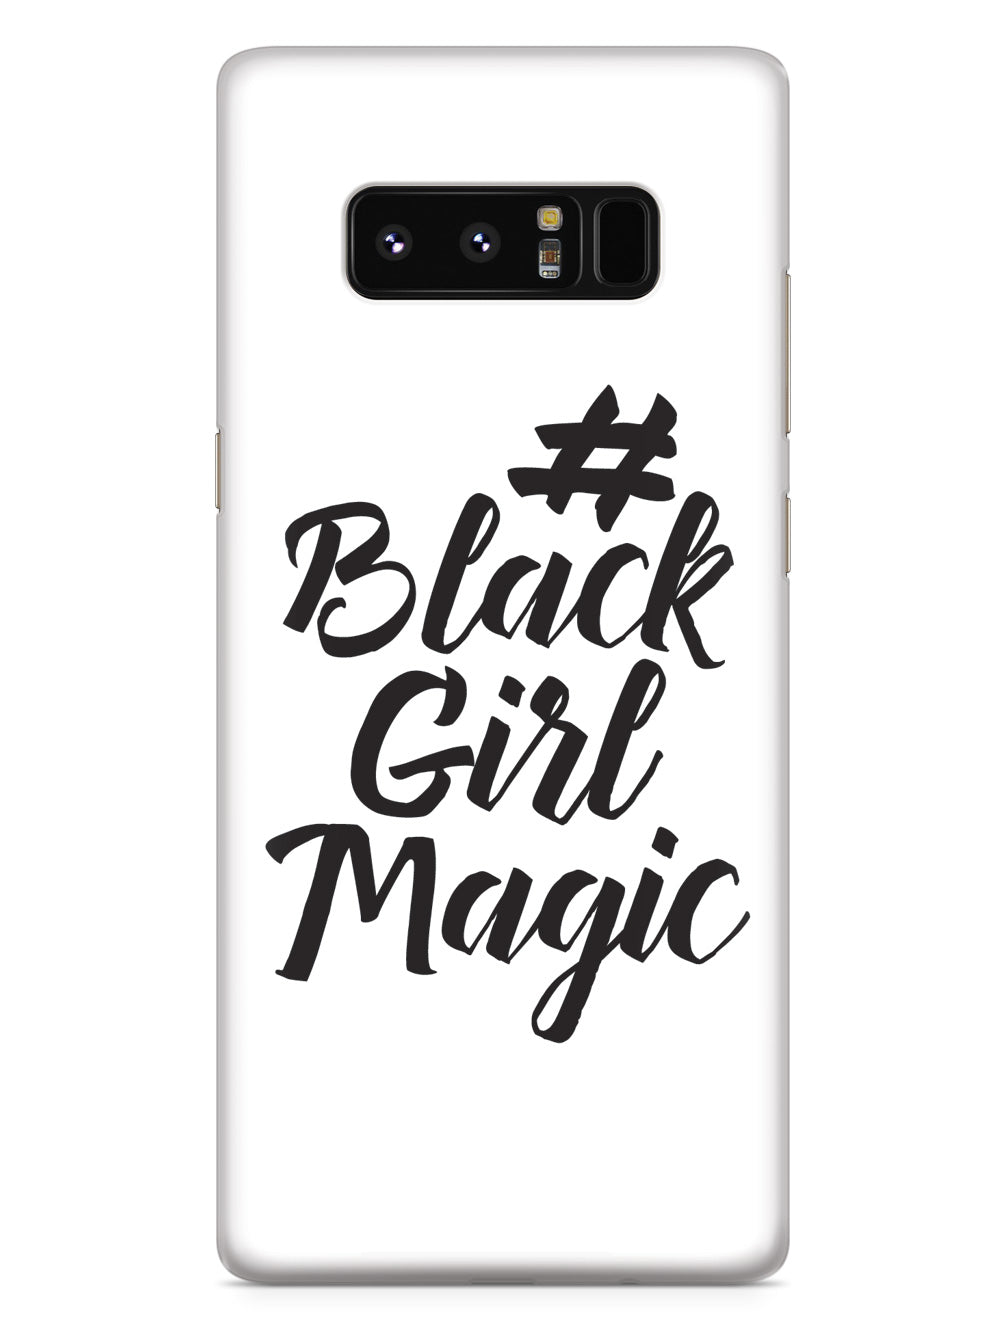 #BlackGirlMagic - White Case